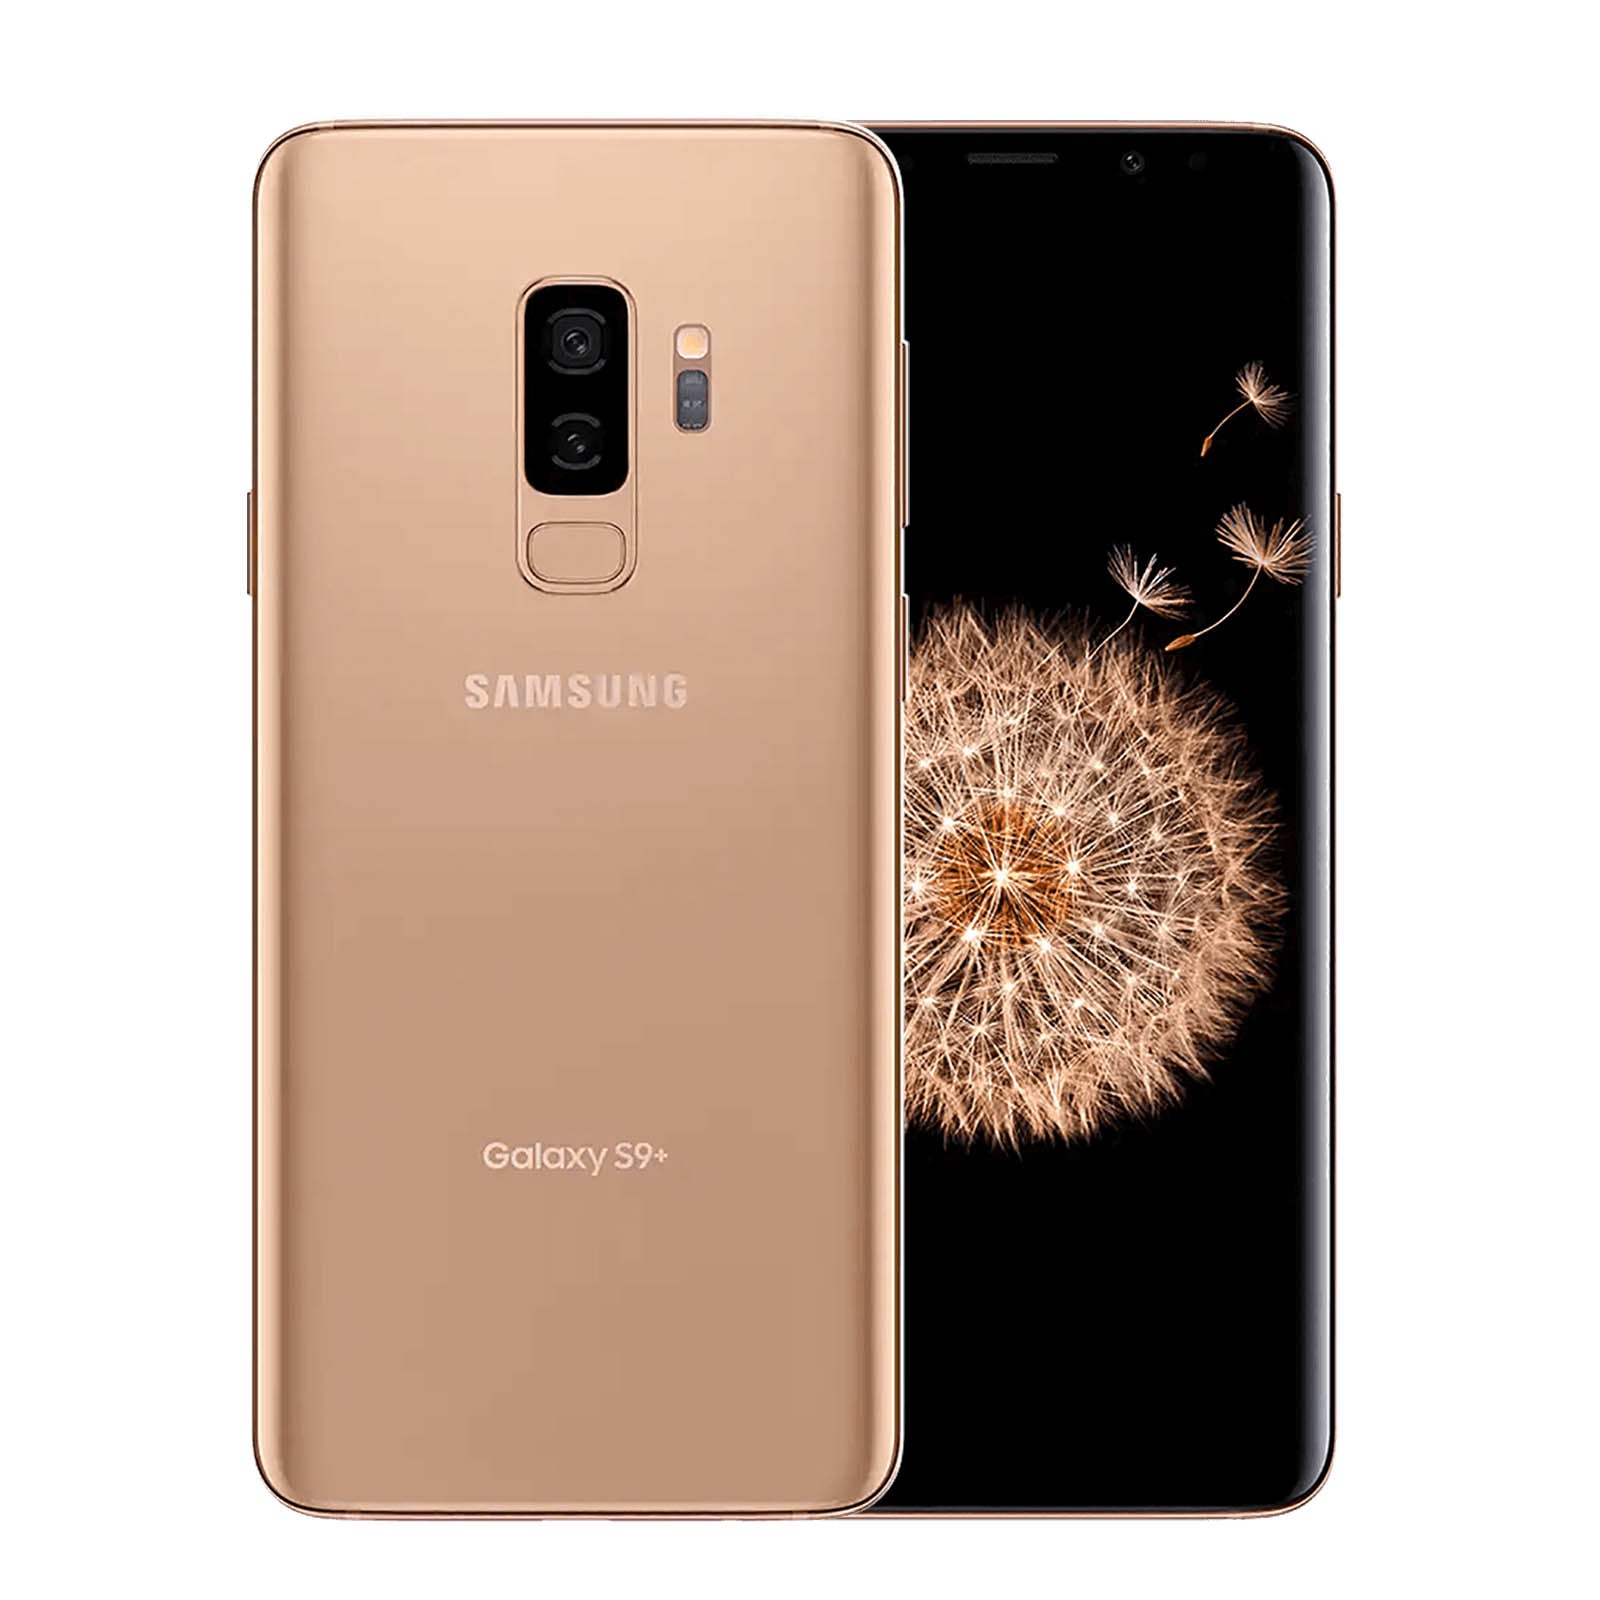 Samsung Galaxy S9 Plus 64GB Gold Very good - Unlocked